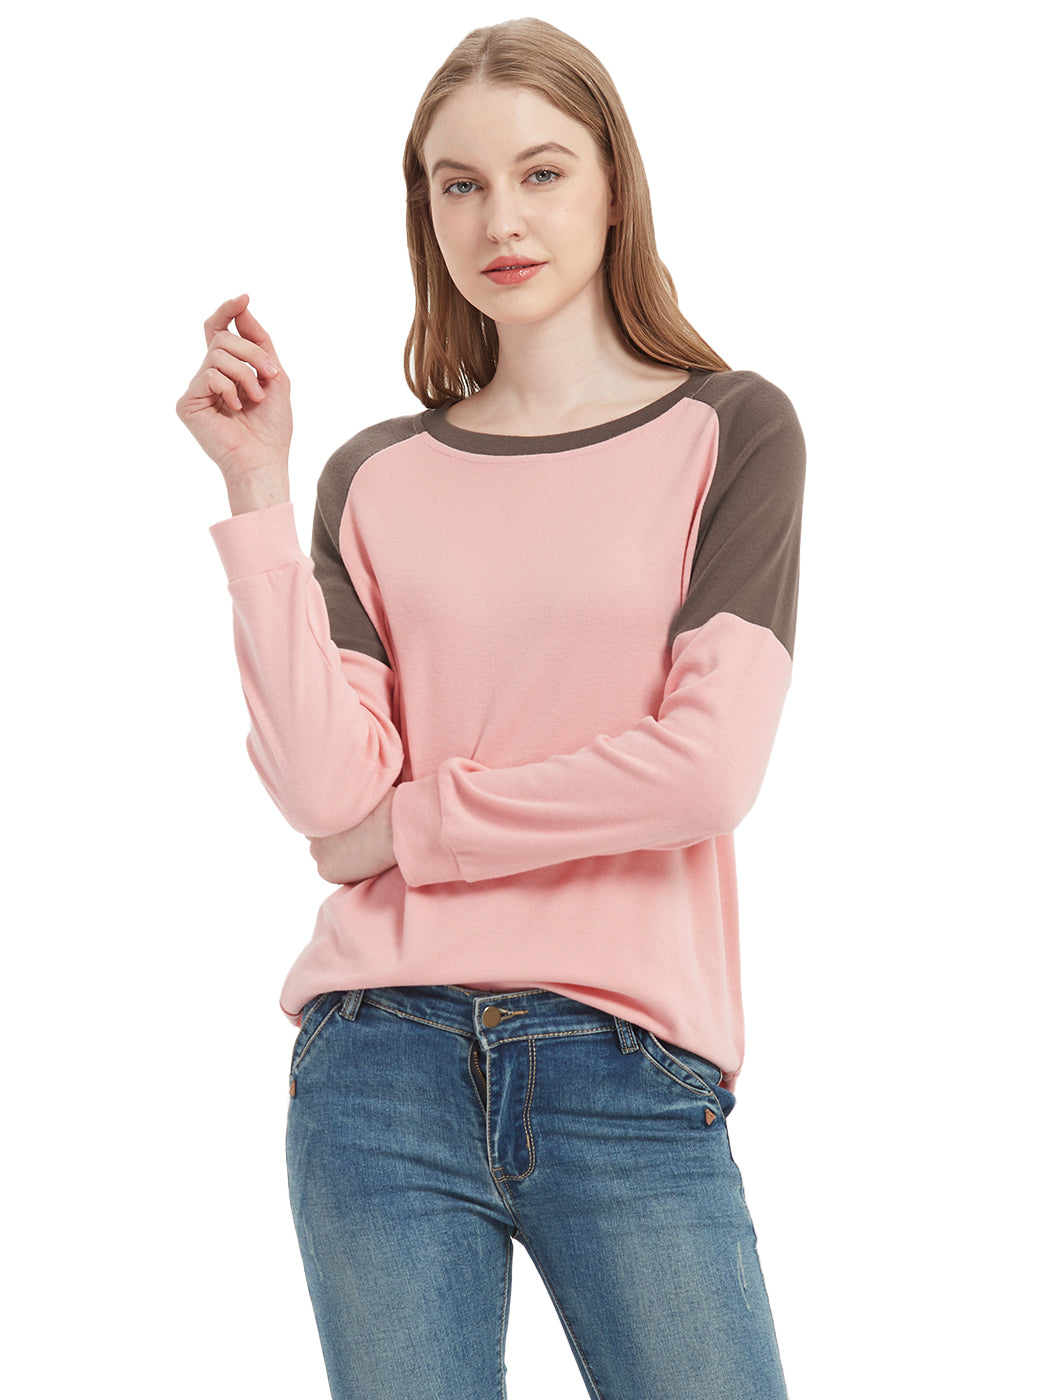 Casual Crewneck Sweatshirts Long Sleeve Color Block Blouses Side Slit Pullover Tops